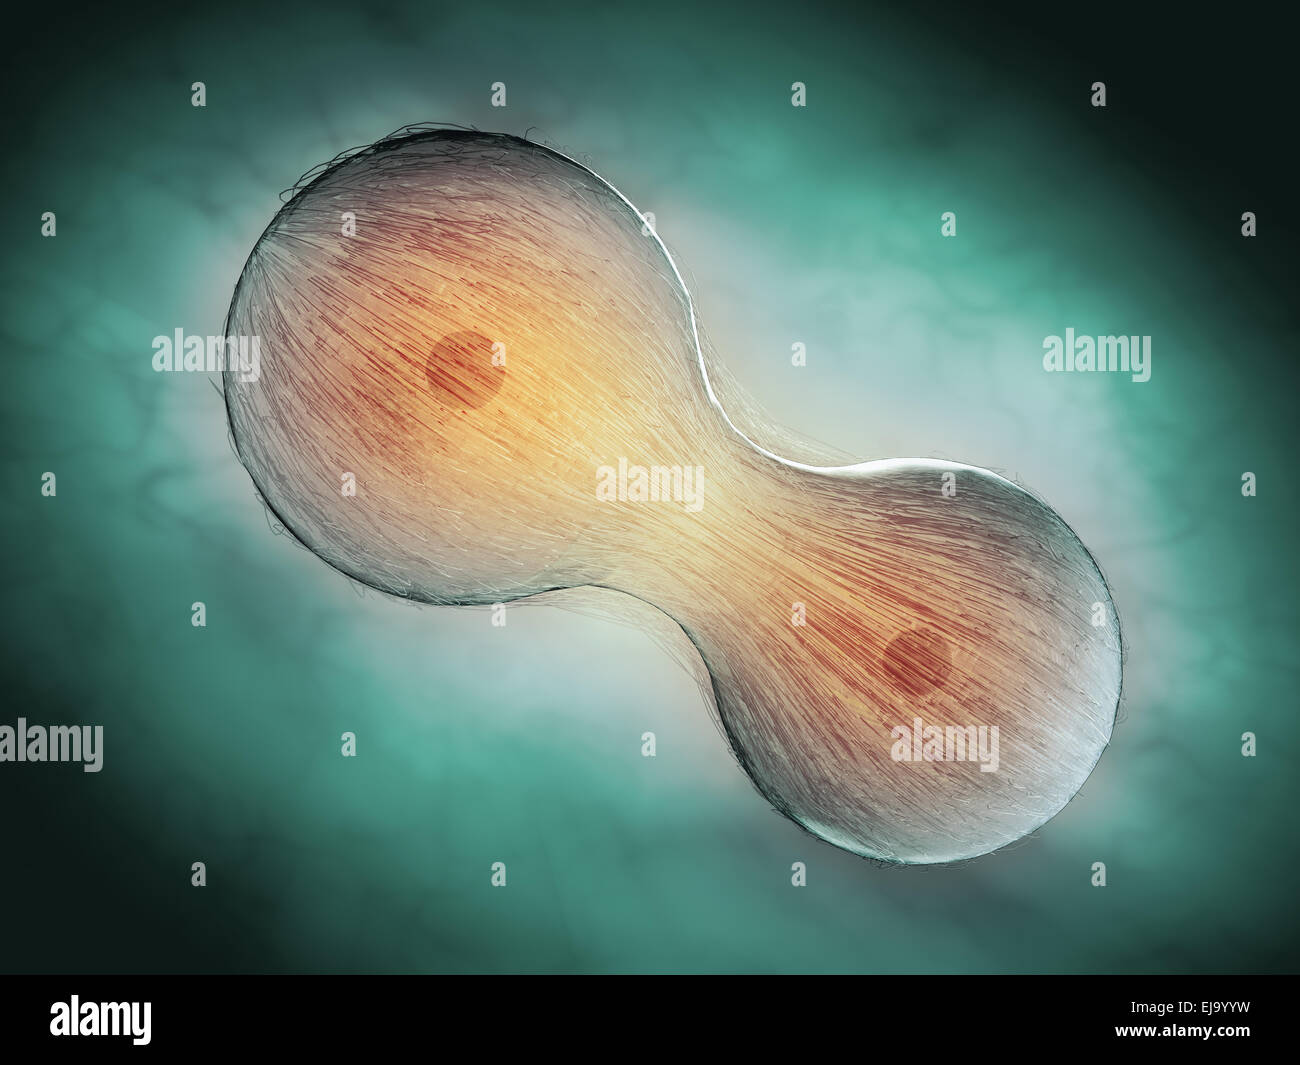 Cell division through mitosis - scientific illustration Stock Photo